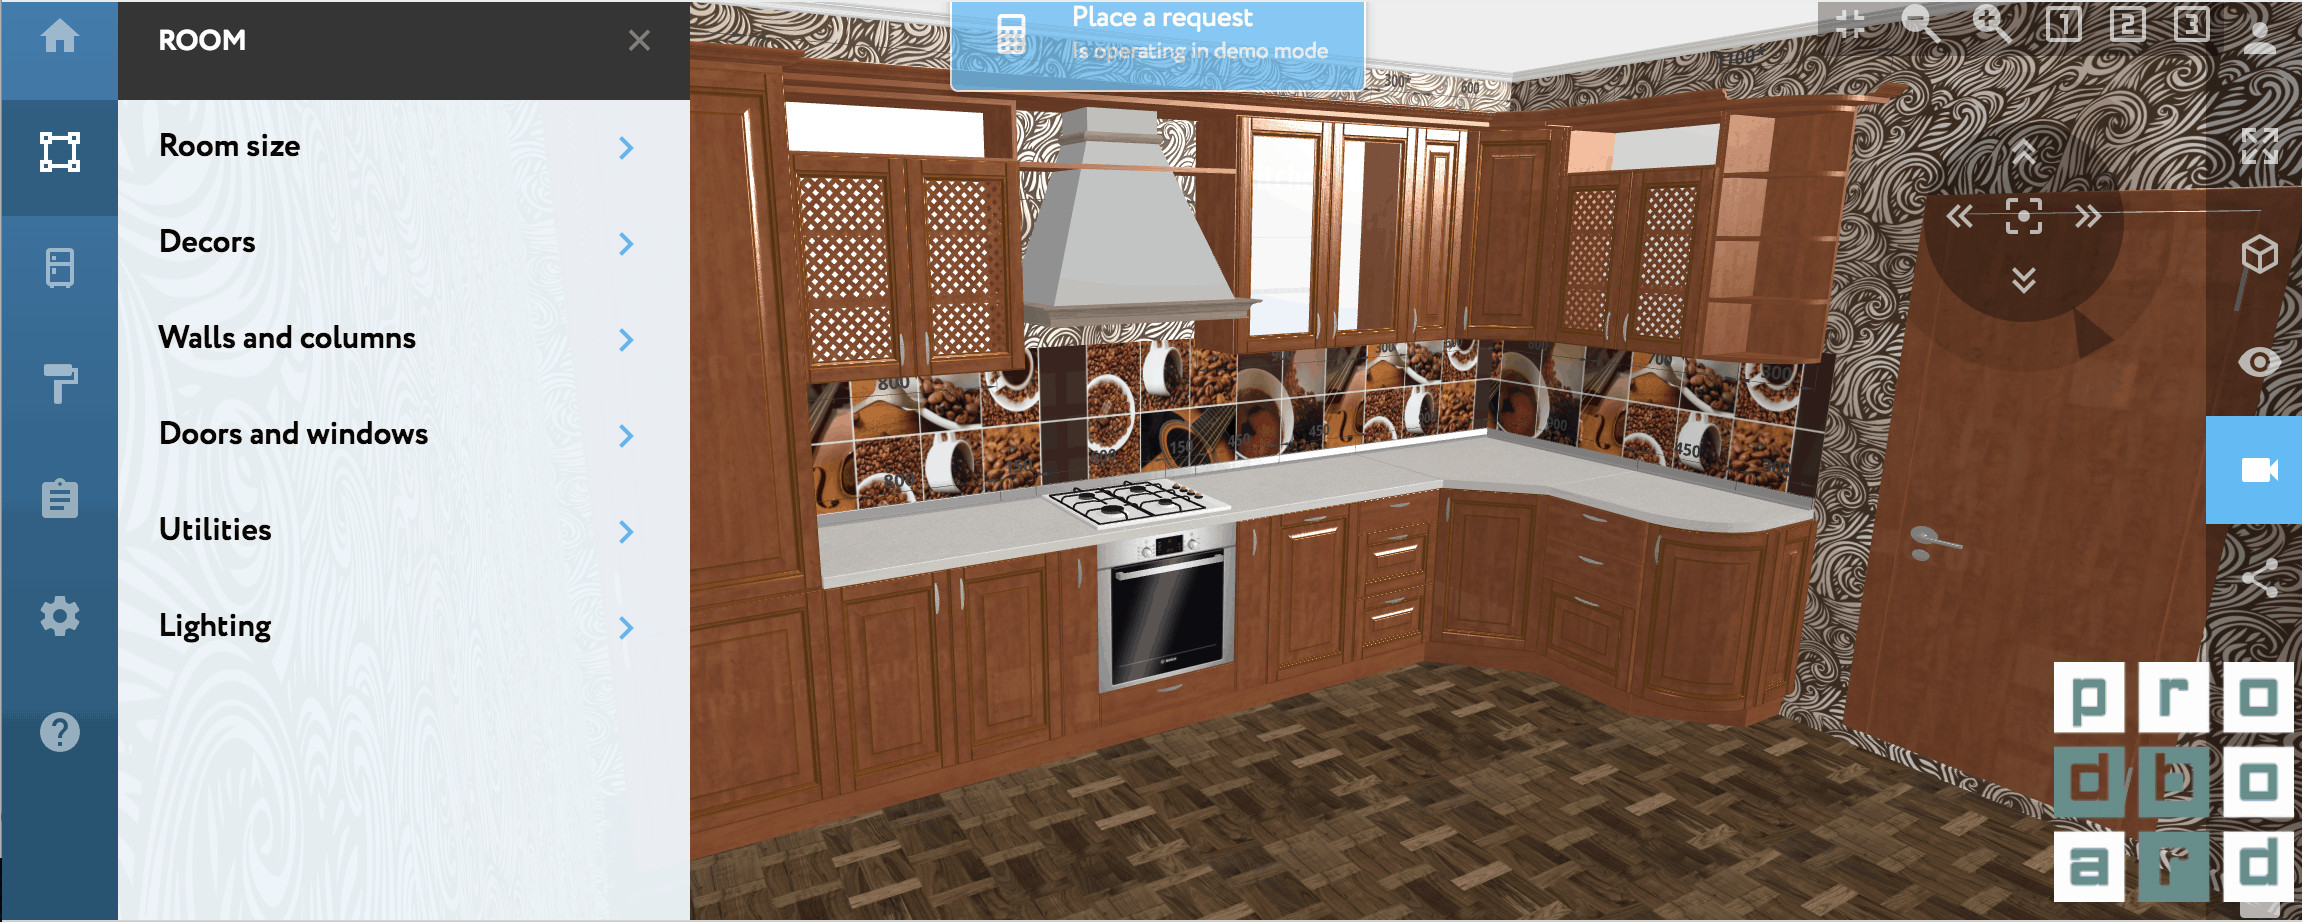 kitchen renovation design app